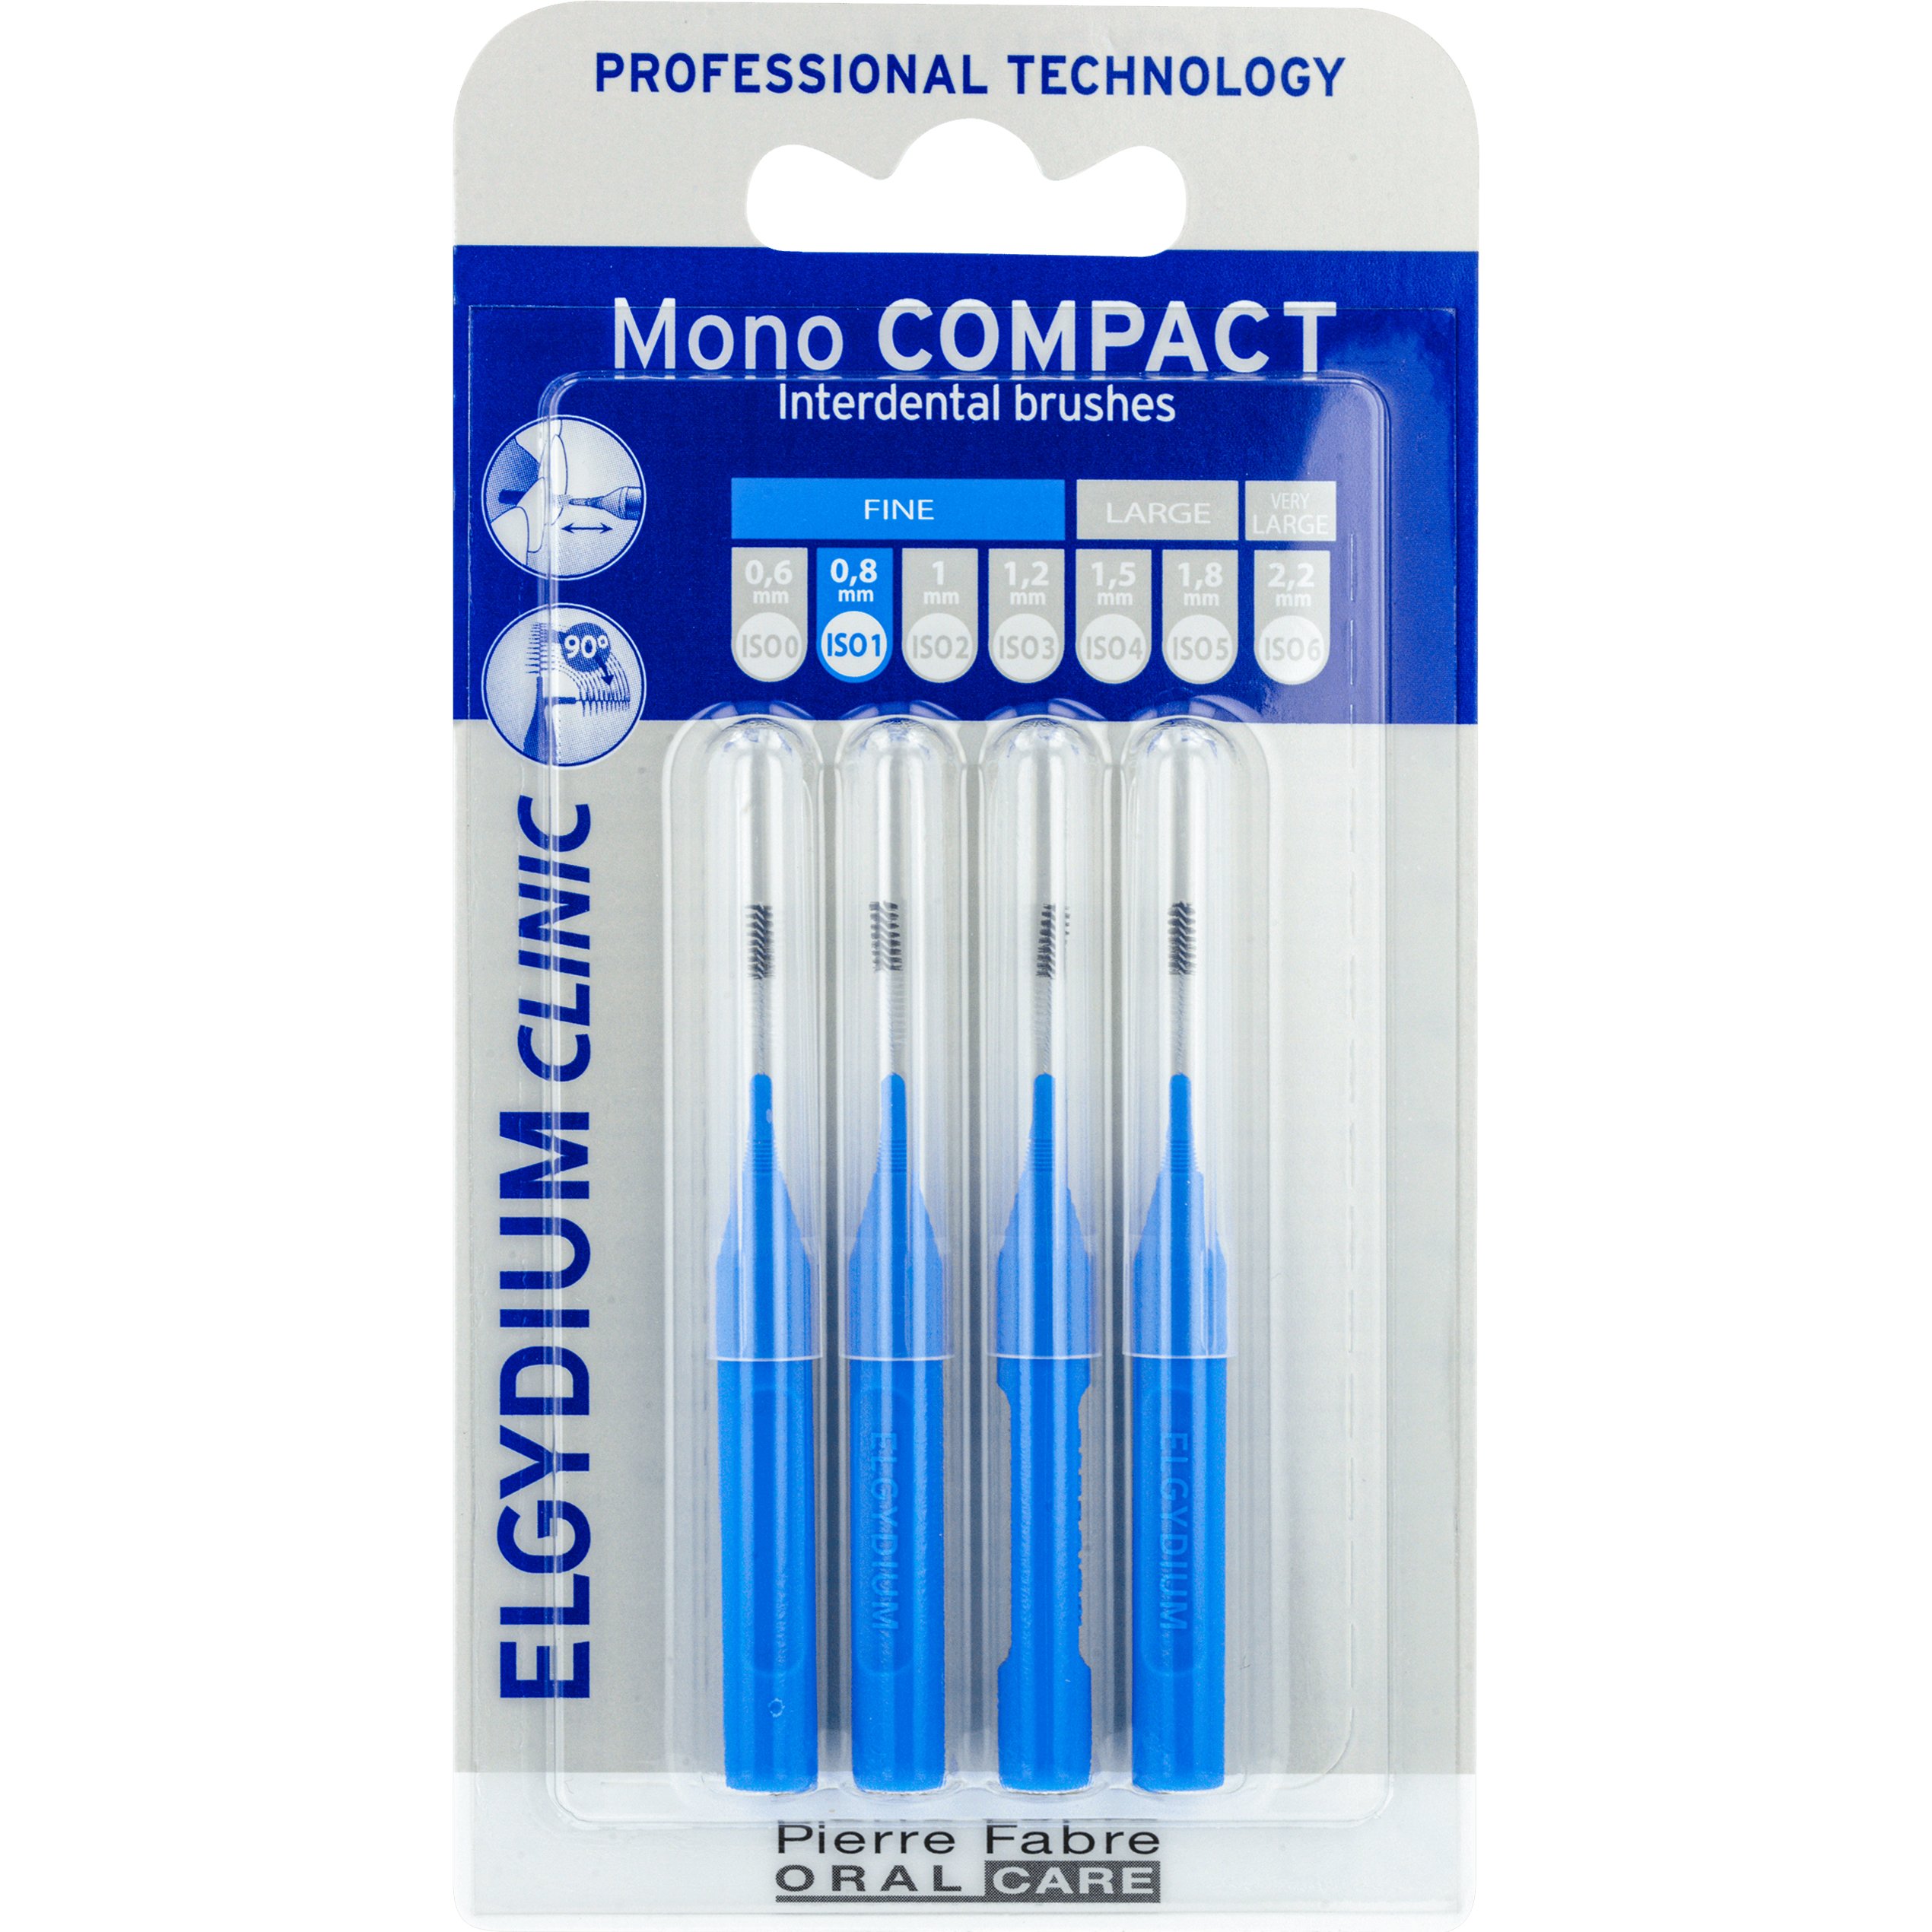 Elgydium Clinic Mono Compact Interdental Brushes 0.4mm Μεσοδόντια Βουρτσάκια Ιδανικά για Άτομα με Εμφυτεύματα ή Σιδεράκια 4 Τεμάχια